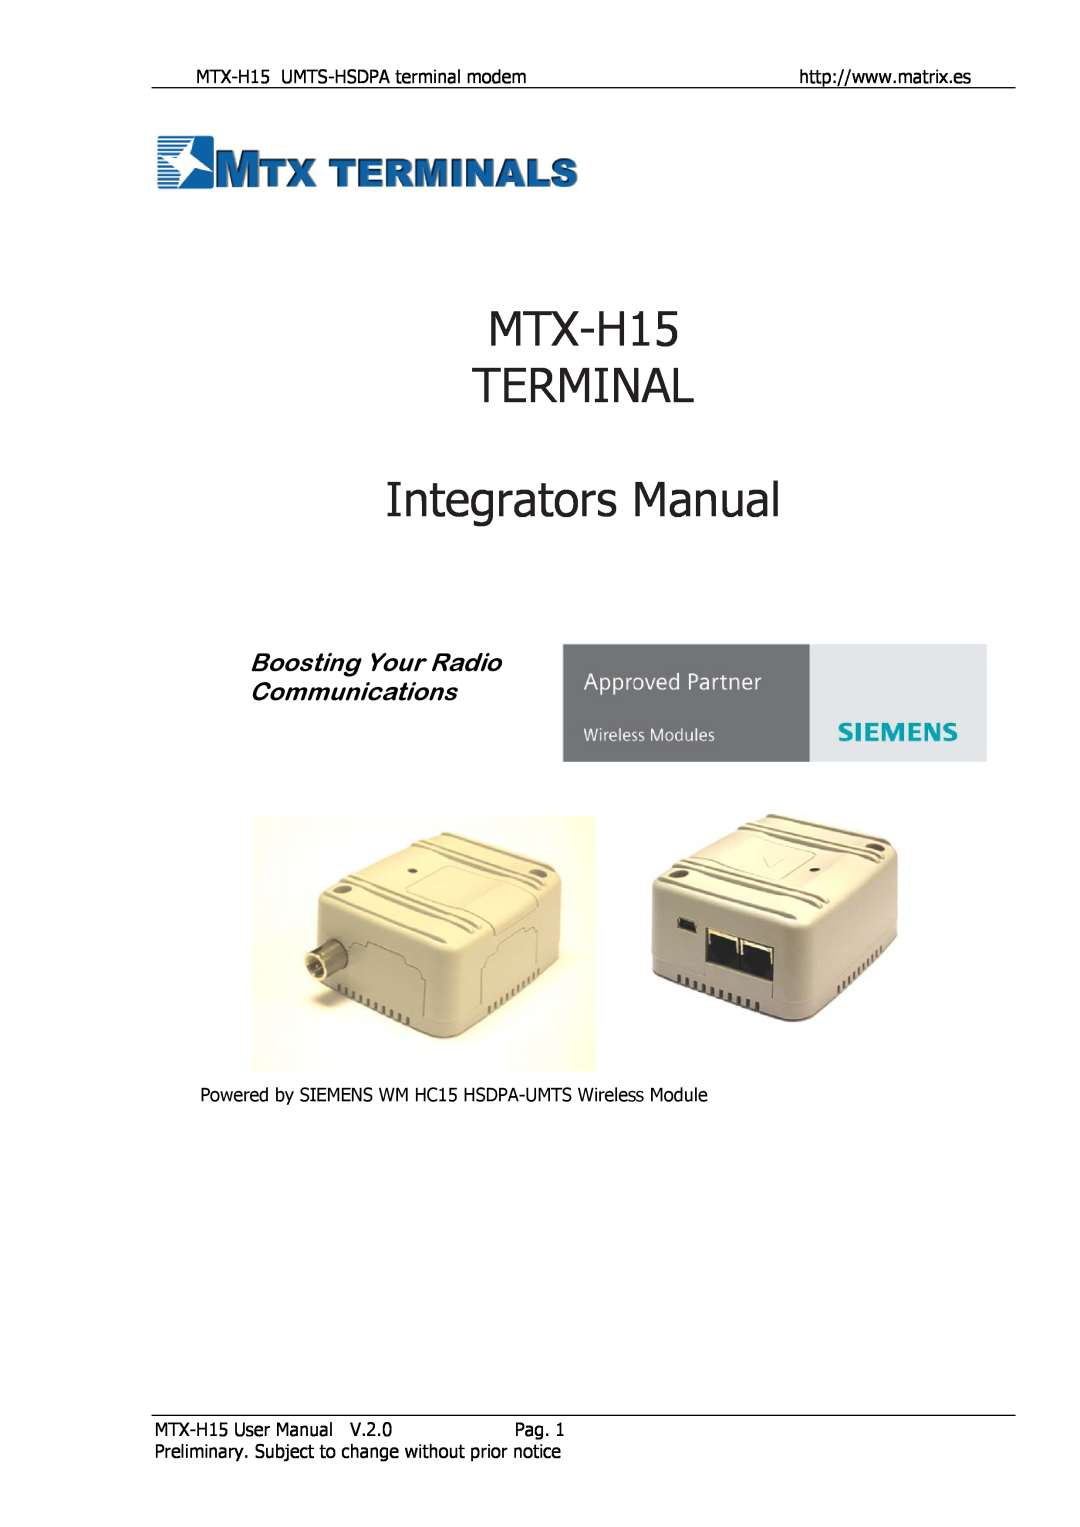 Siemens user manual MTX-H15 TERMINAL Integrators Manual, Boosting Your Radio Communications 